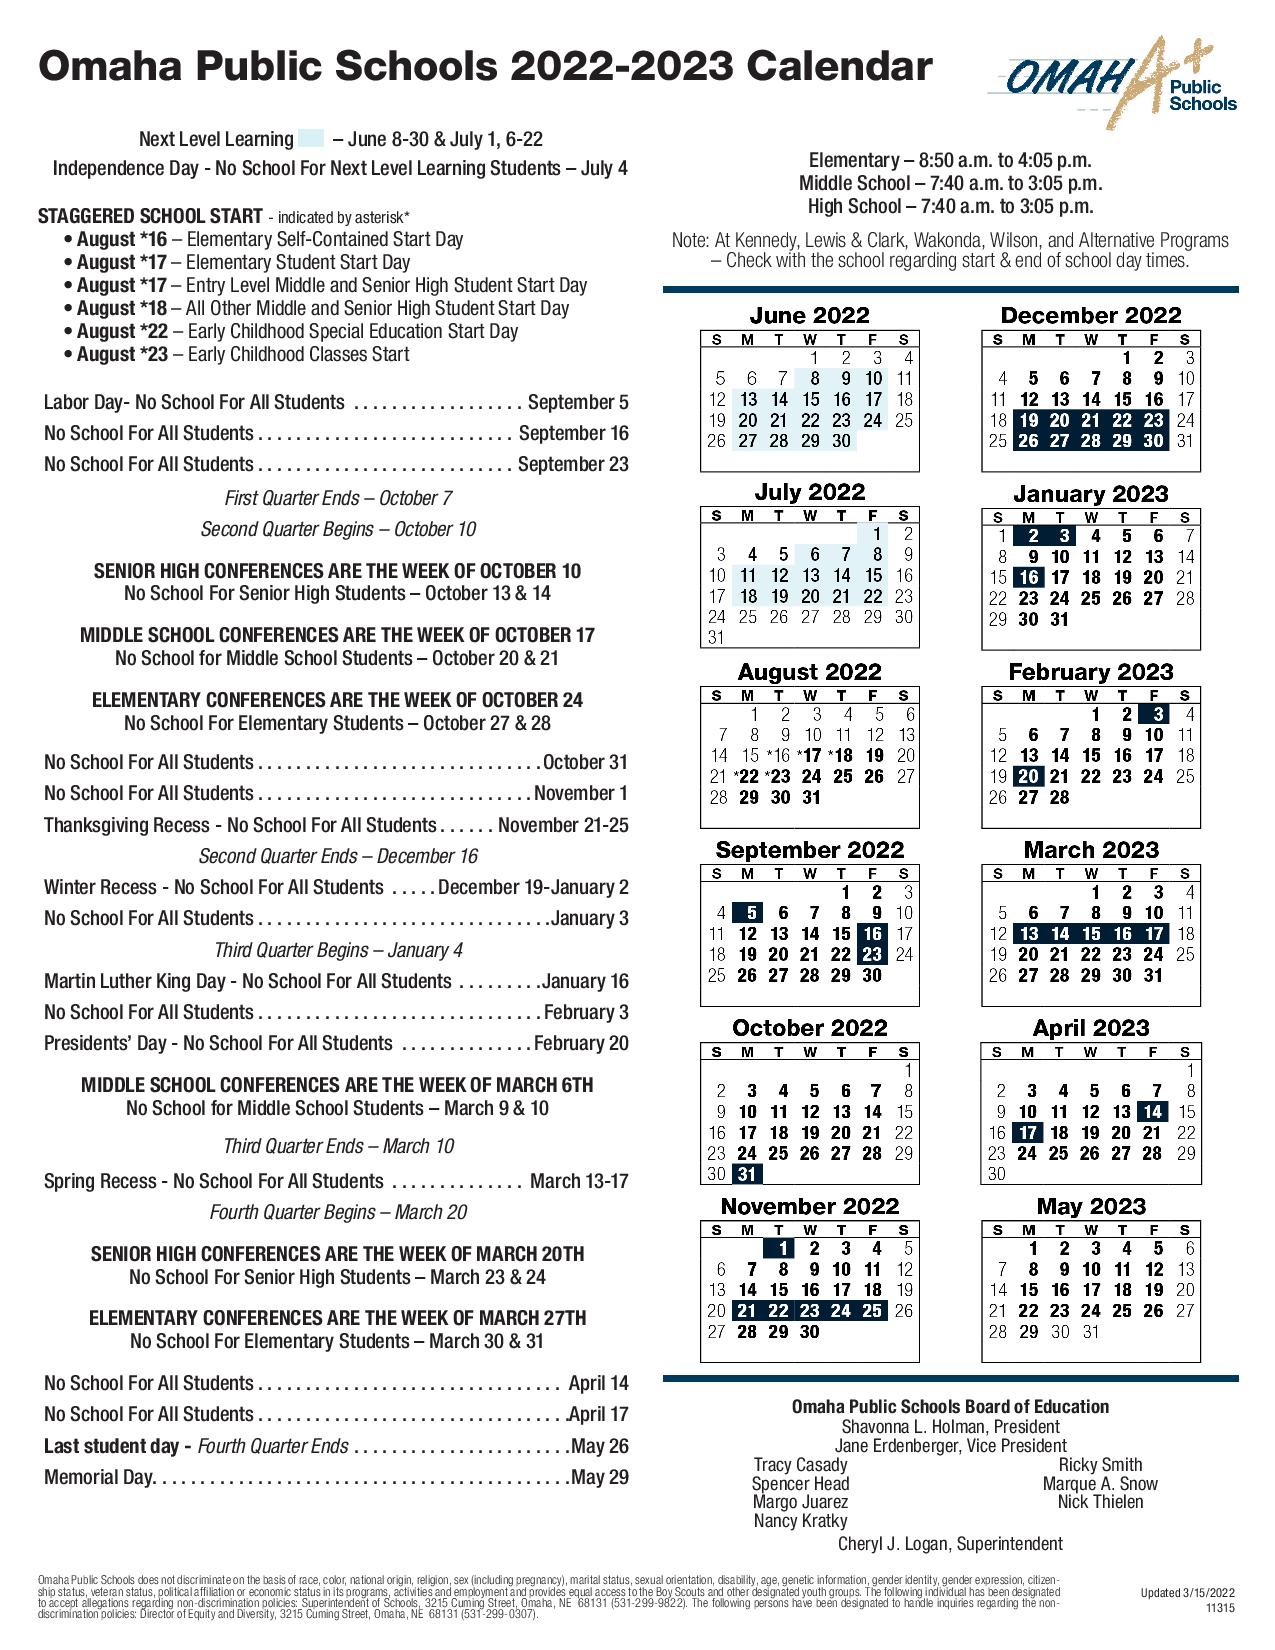 Omaha Public Schools Calendar Holidays 2022 2023 PDF